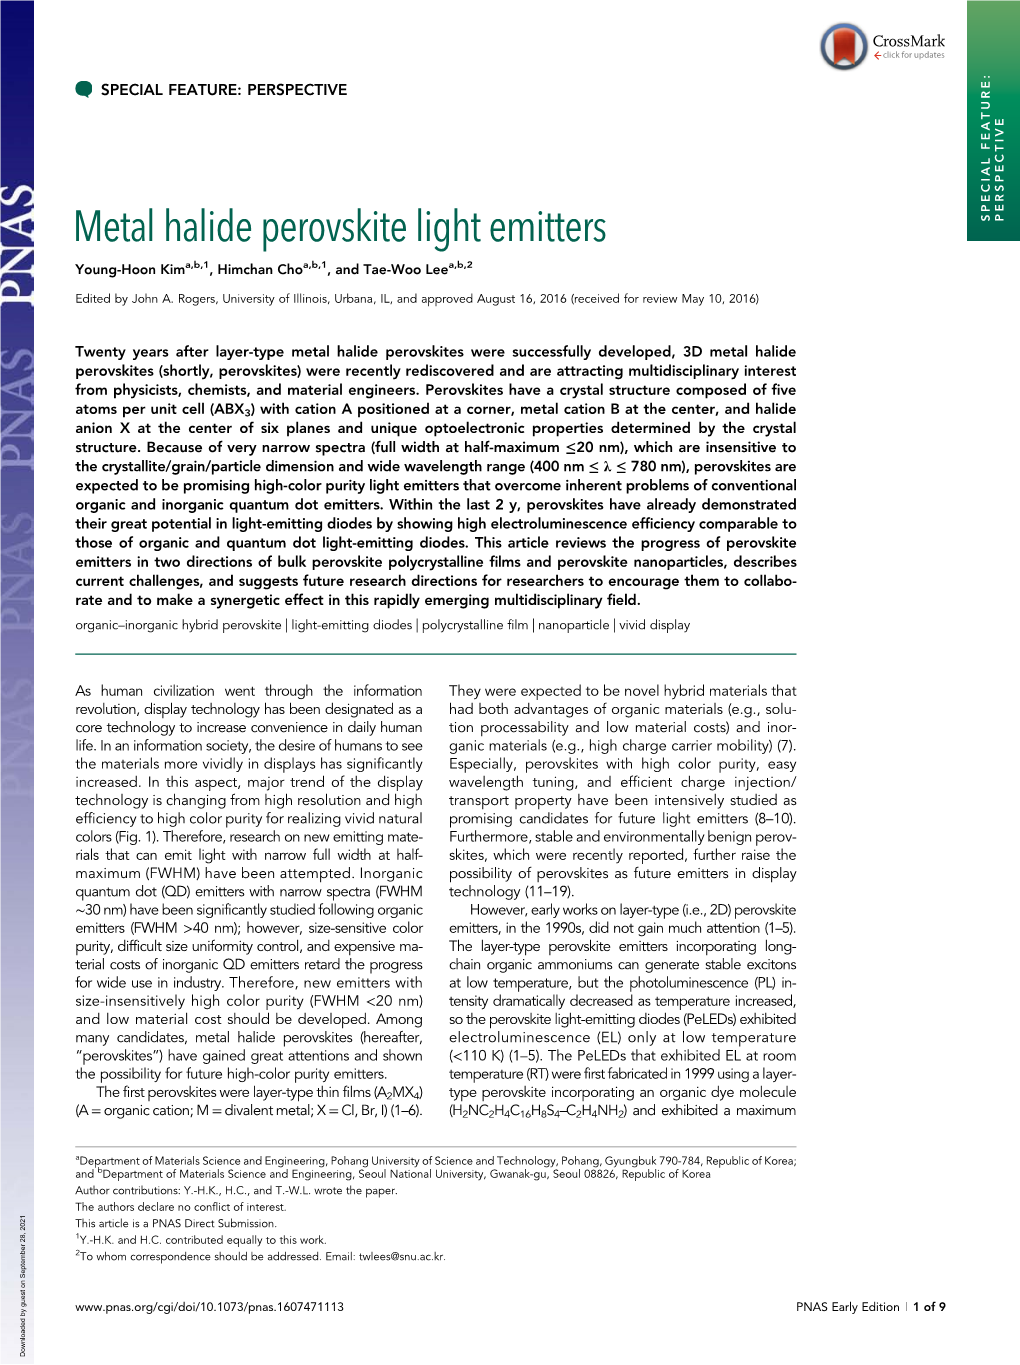 Metal Halide Perovskite Light Emitters SPECIAL FEATURE: PERSPECTIVE Young-Hoon Kima,B,1, Himchan Choa,B,1, and Tae-Woo Leea,B,2